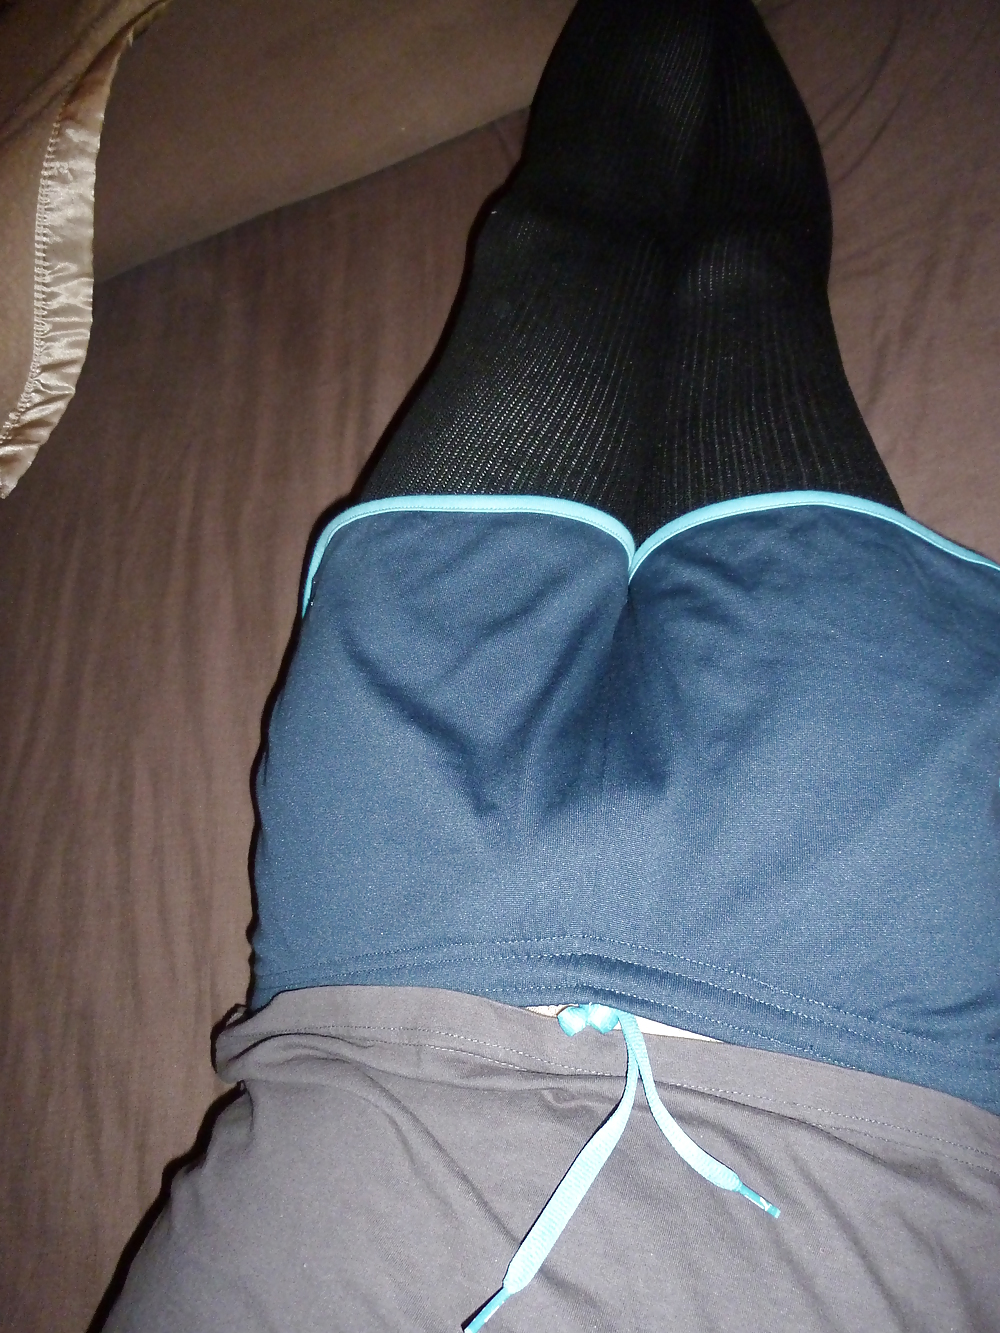 Showing some sporty shorts socks stuff  #5089559